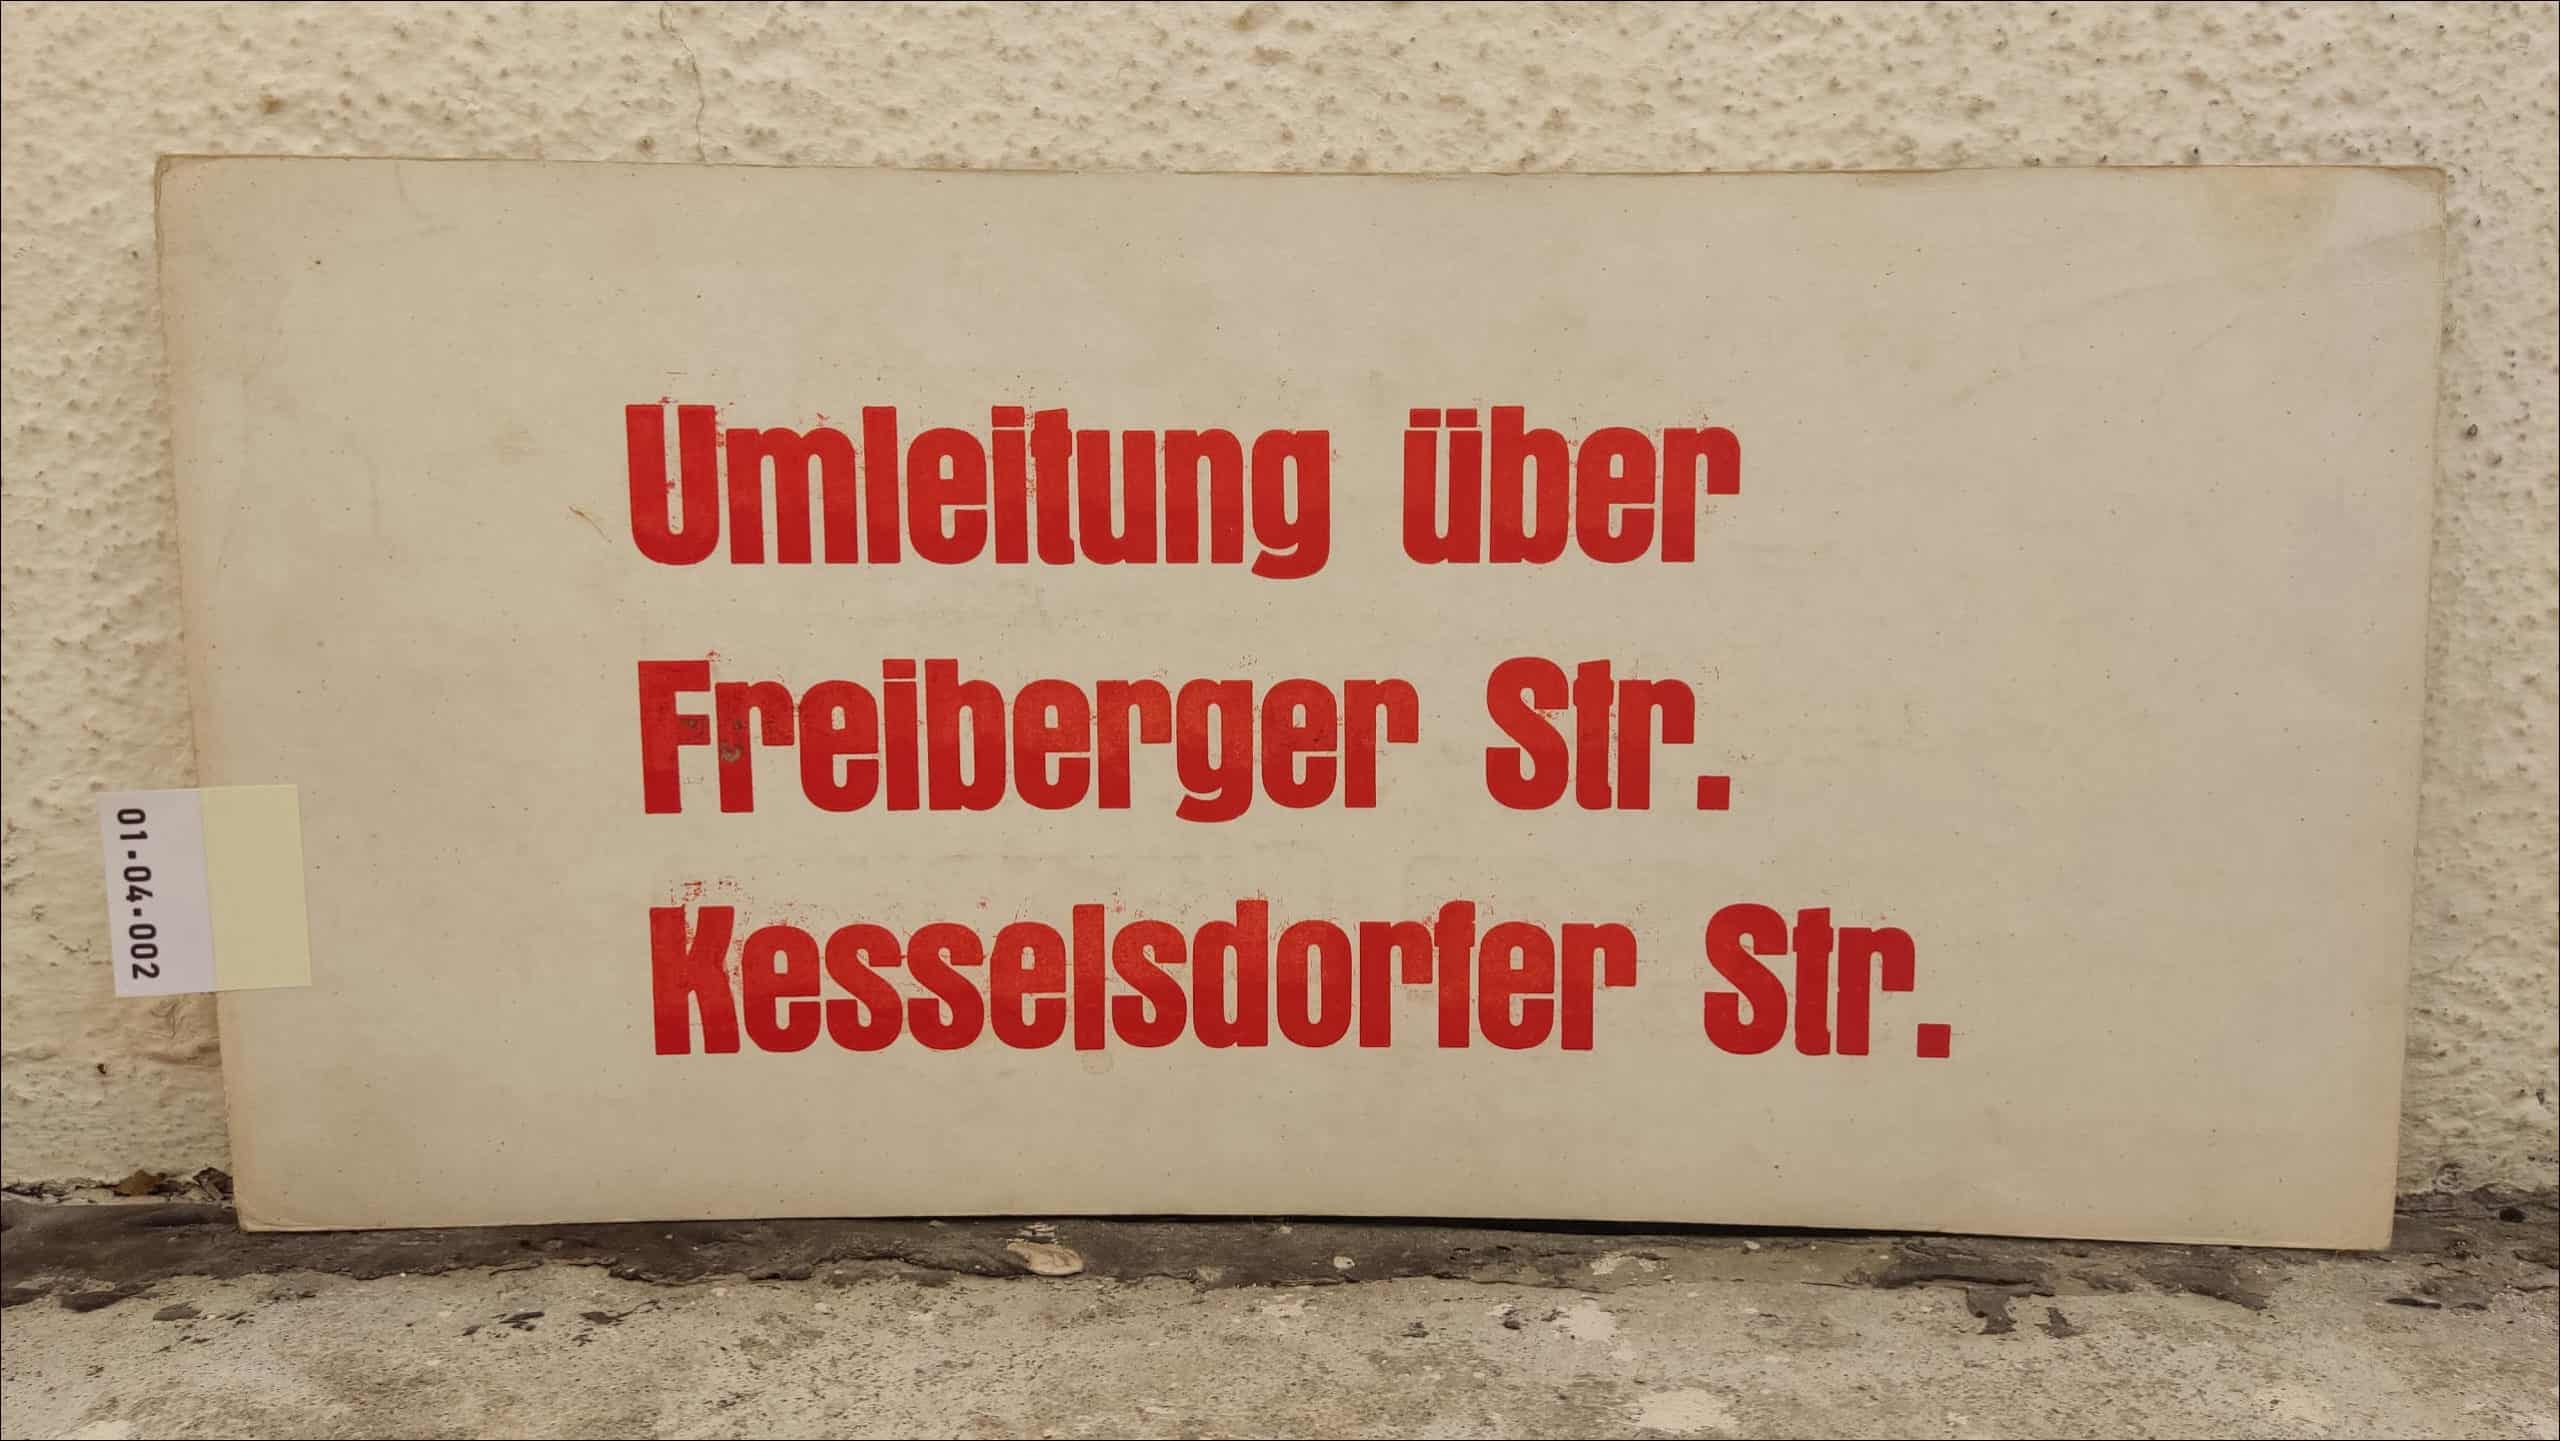 Umleitung über Freiberger Str. Kesselsdorfer Str.